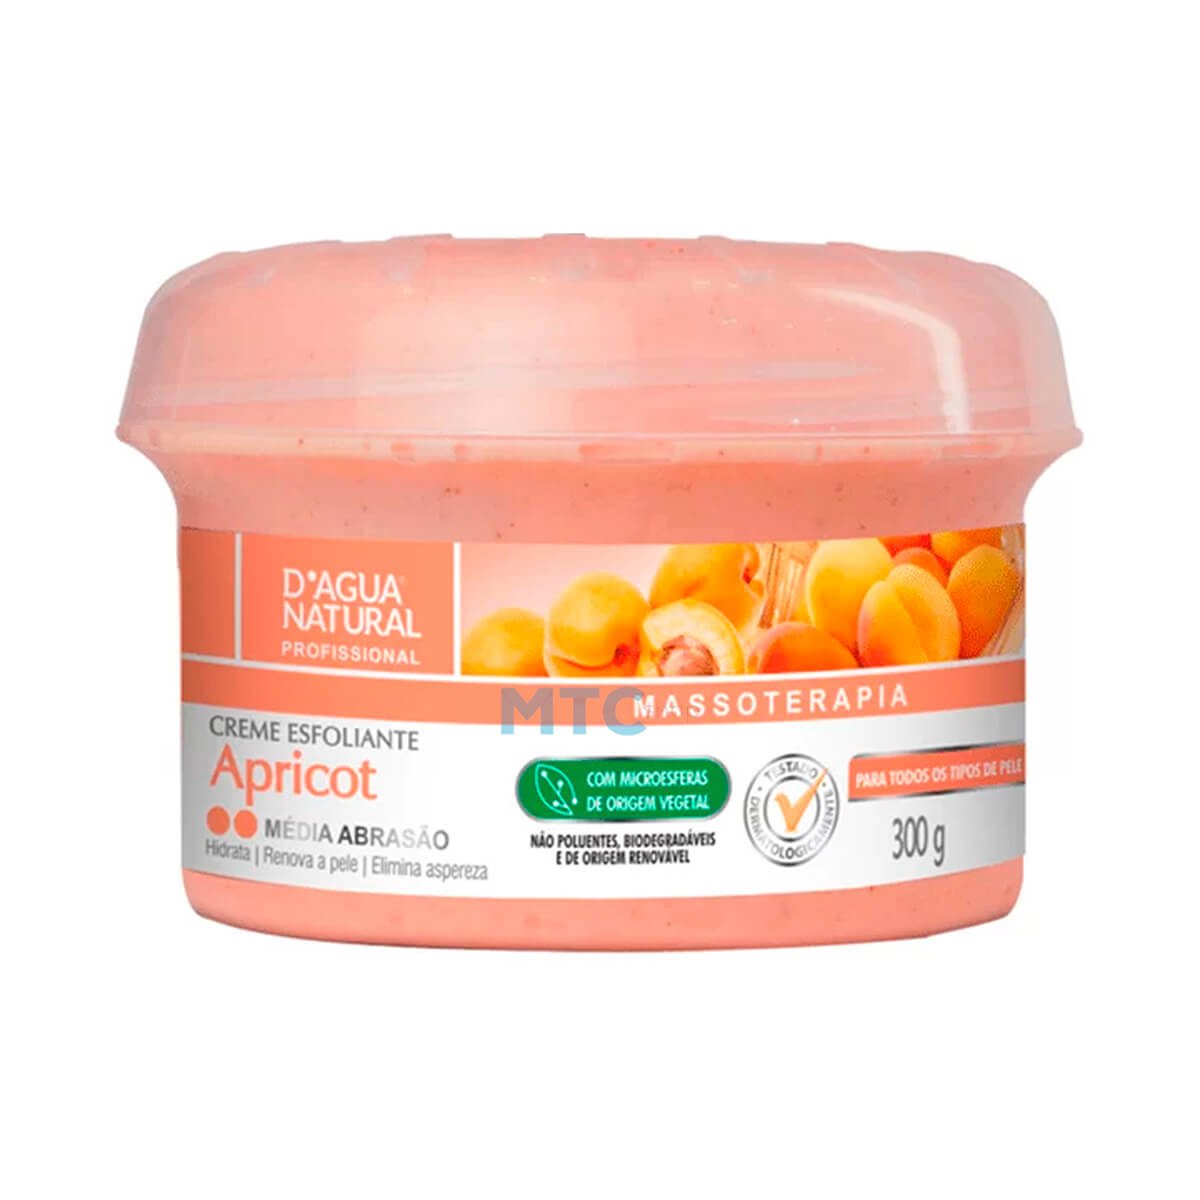 Creme Esfoliante Apricot Média Abrasão - 300g - D'Agua Natural